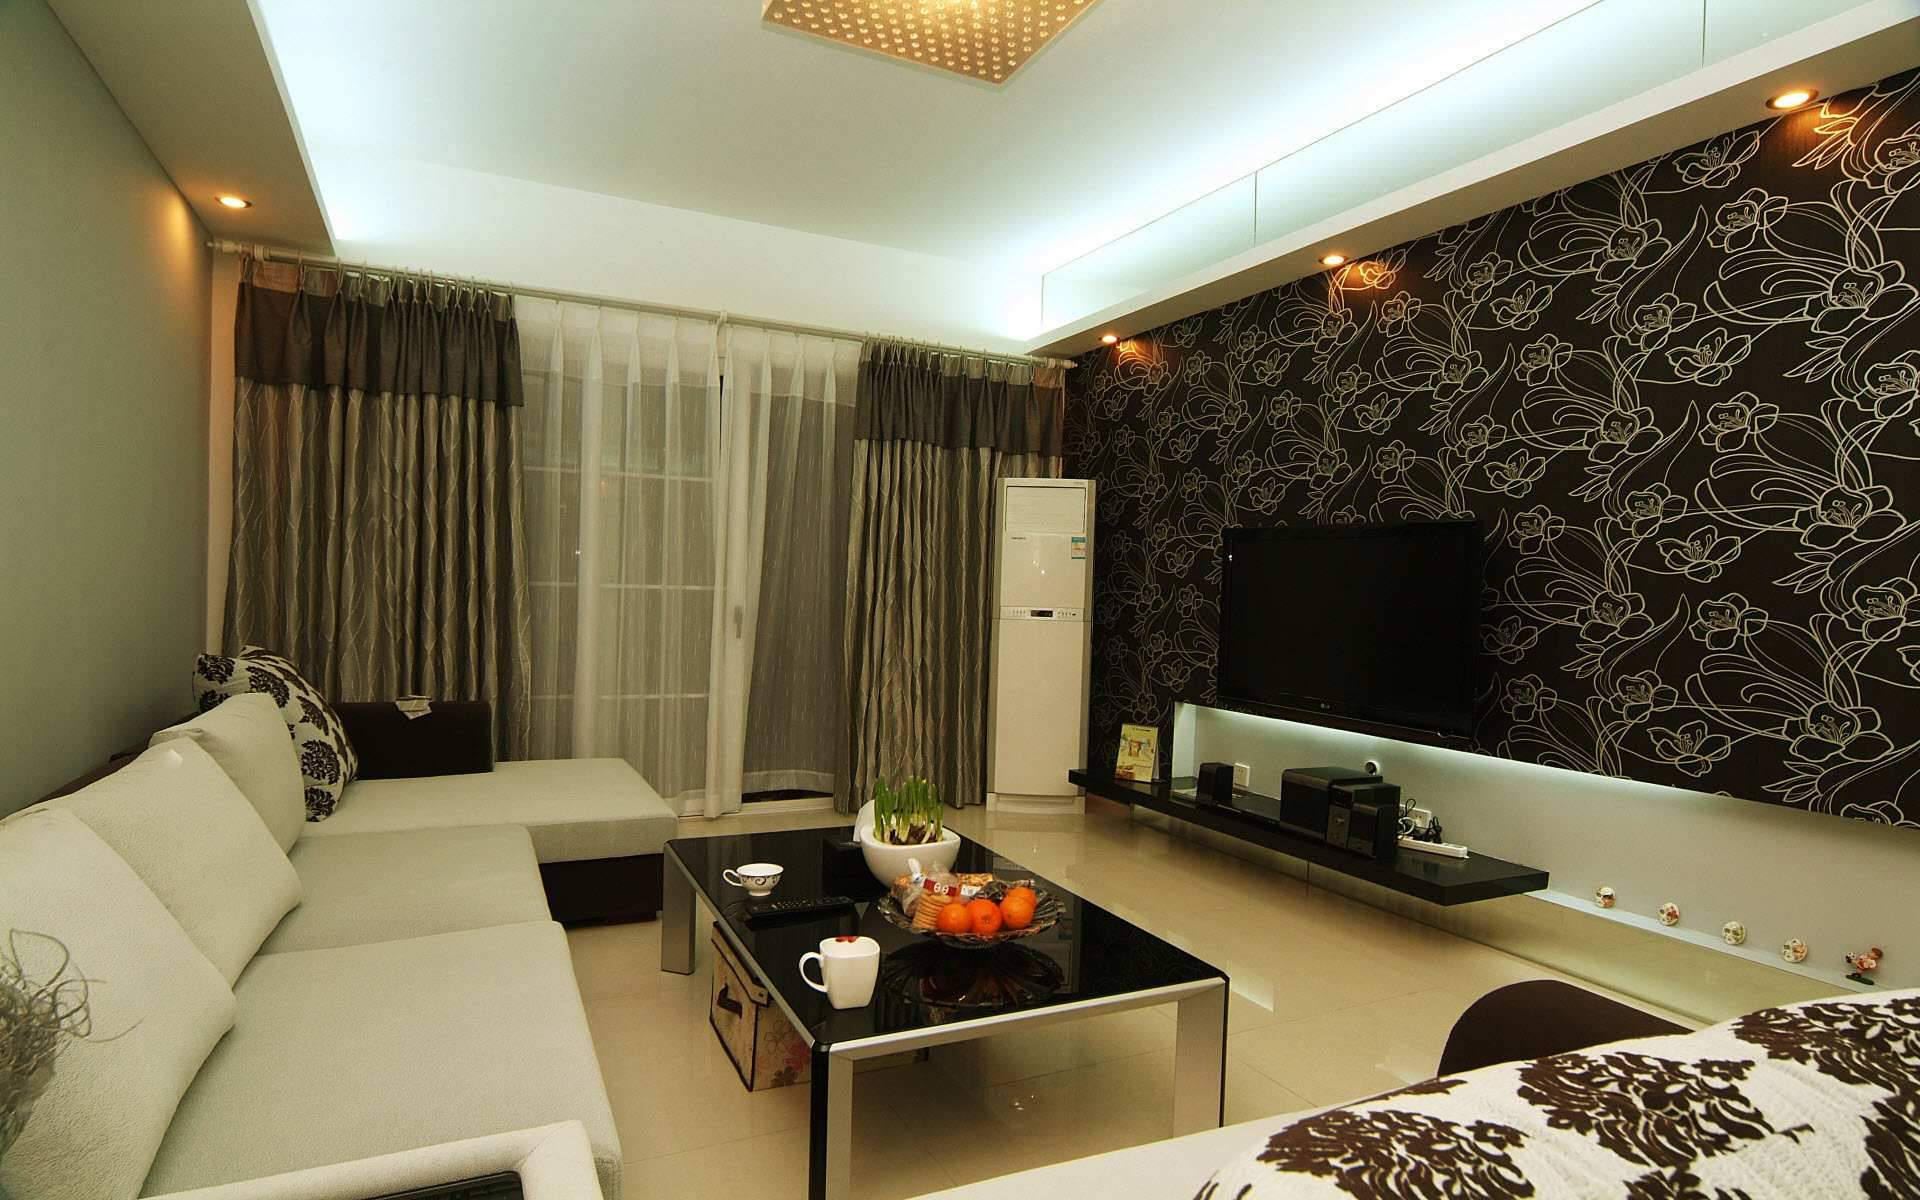 Best ideas about Interiors Design Ideas Living Room
. Save or Pin 30 Best Interior Design Ideas Now.